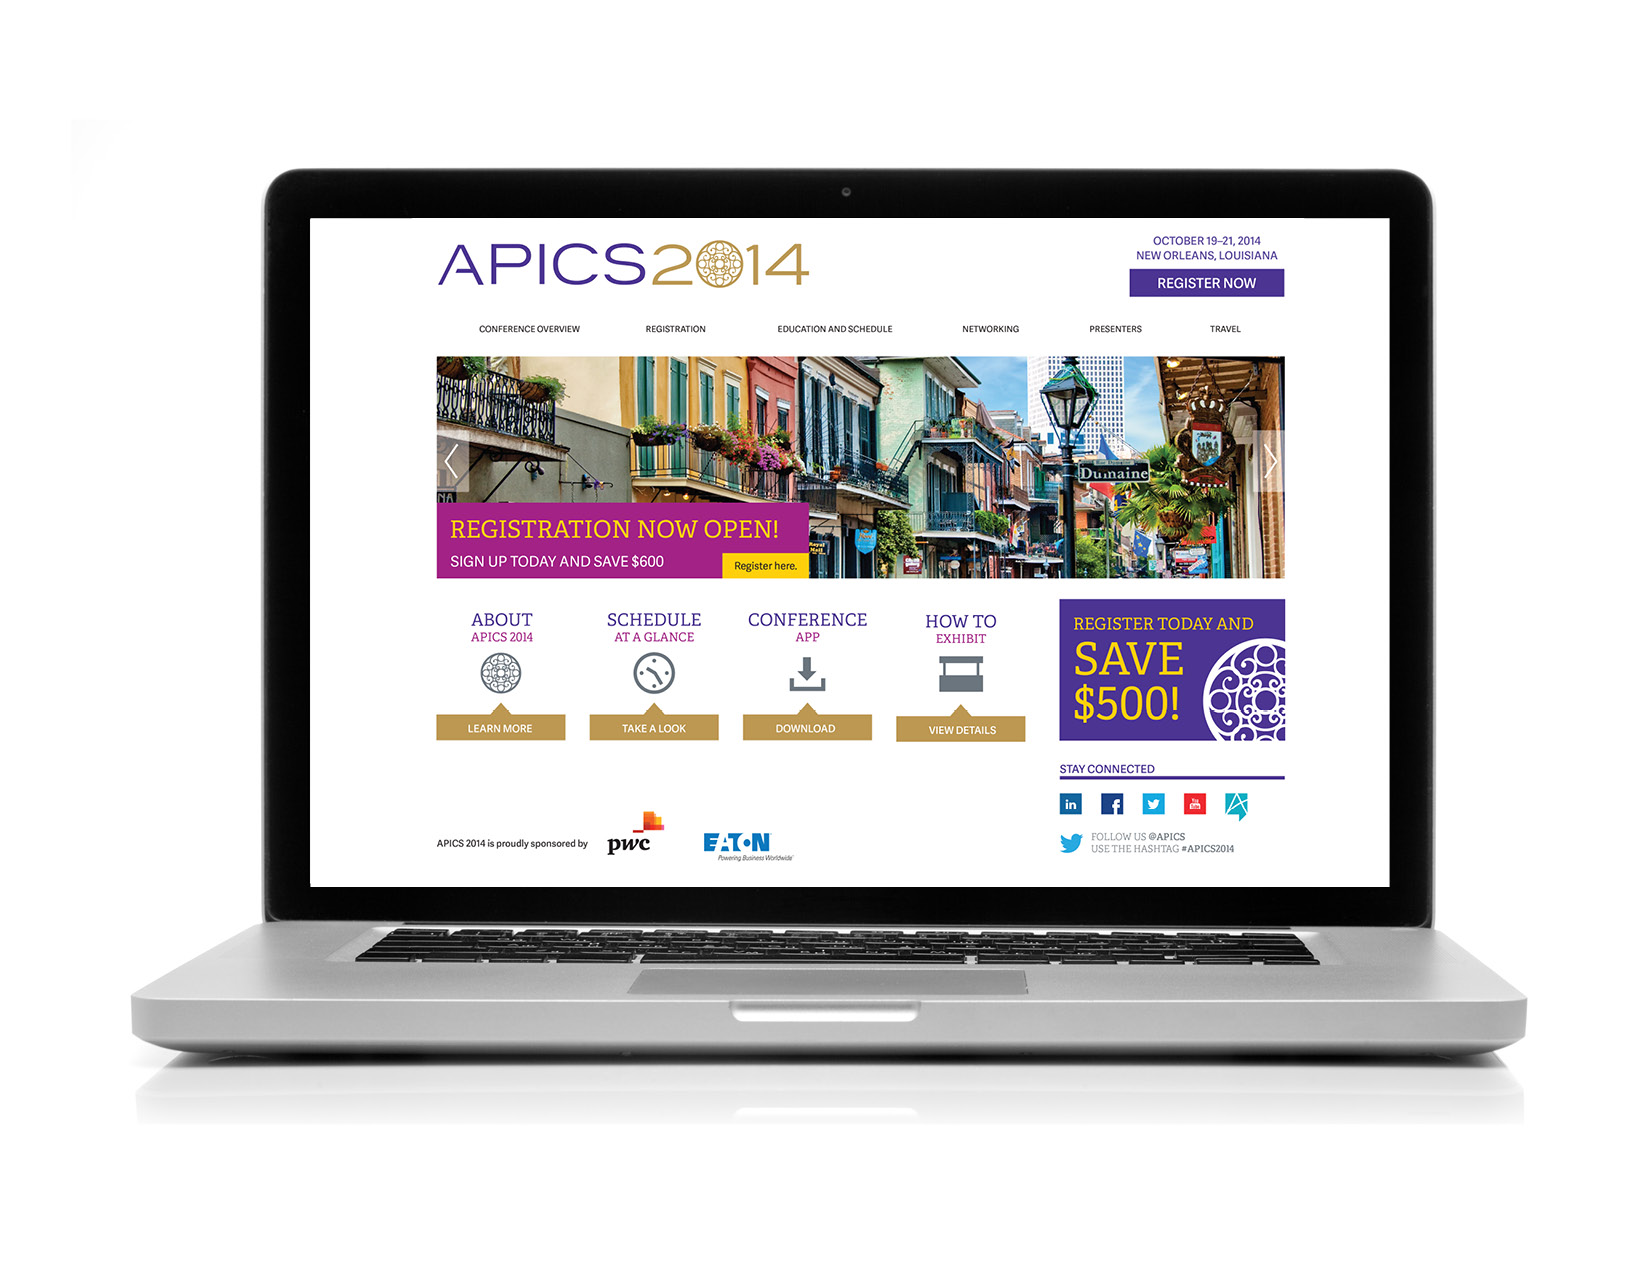  APICS 2014 microsite homepage 